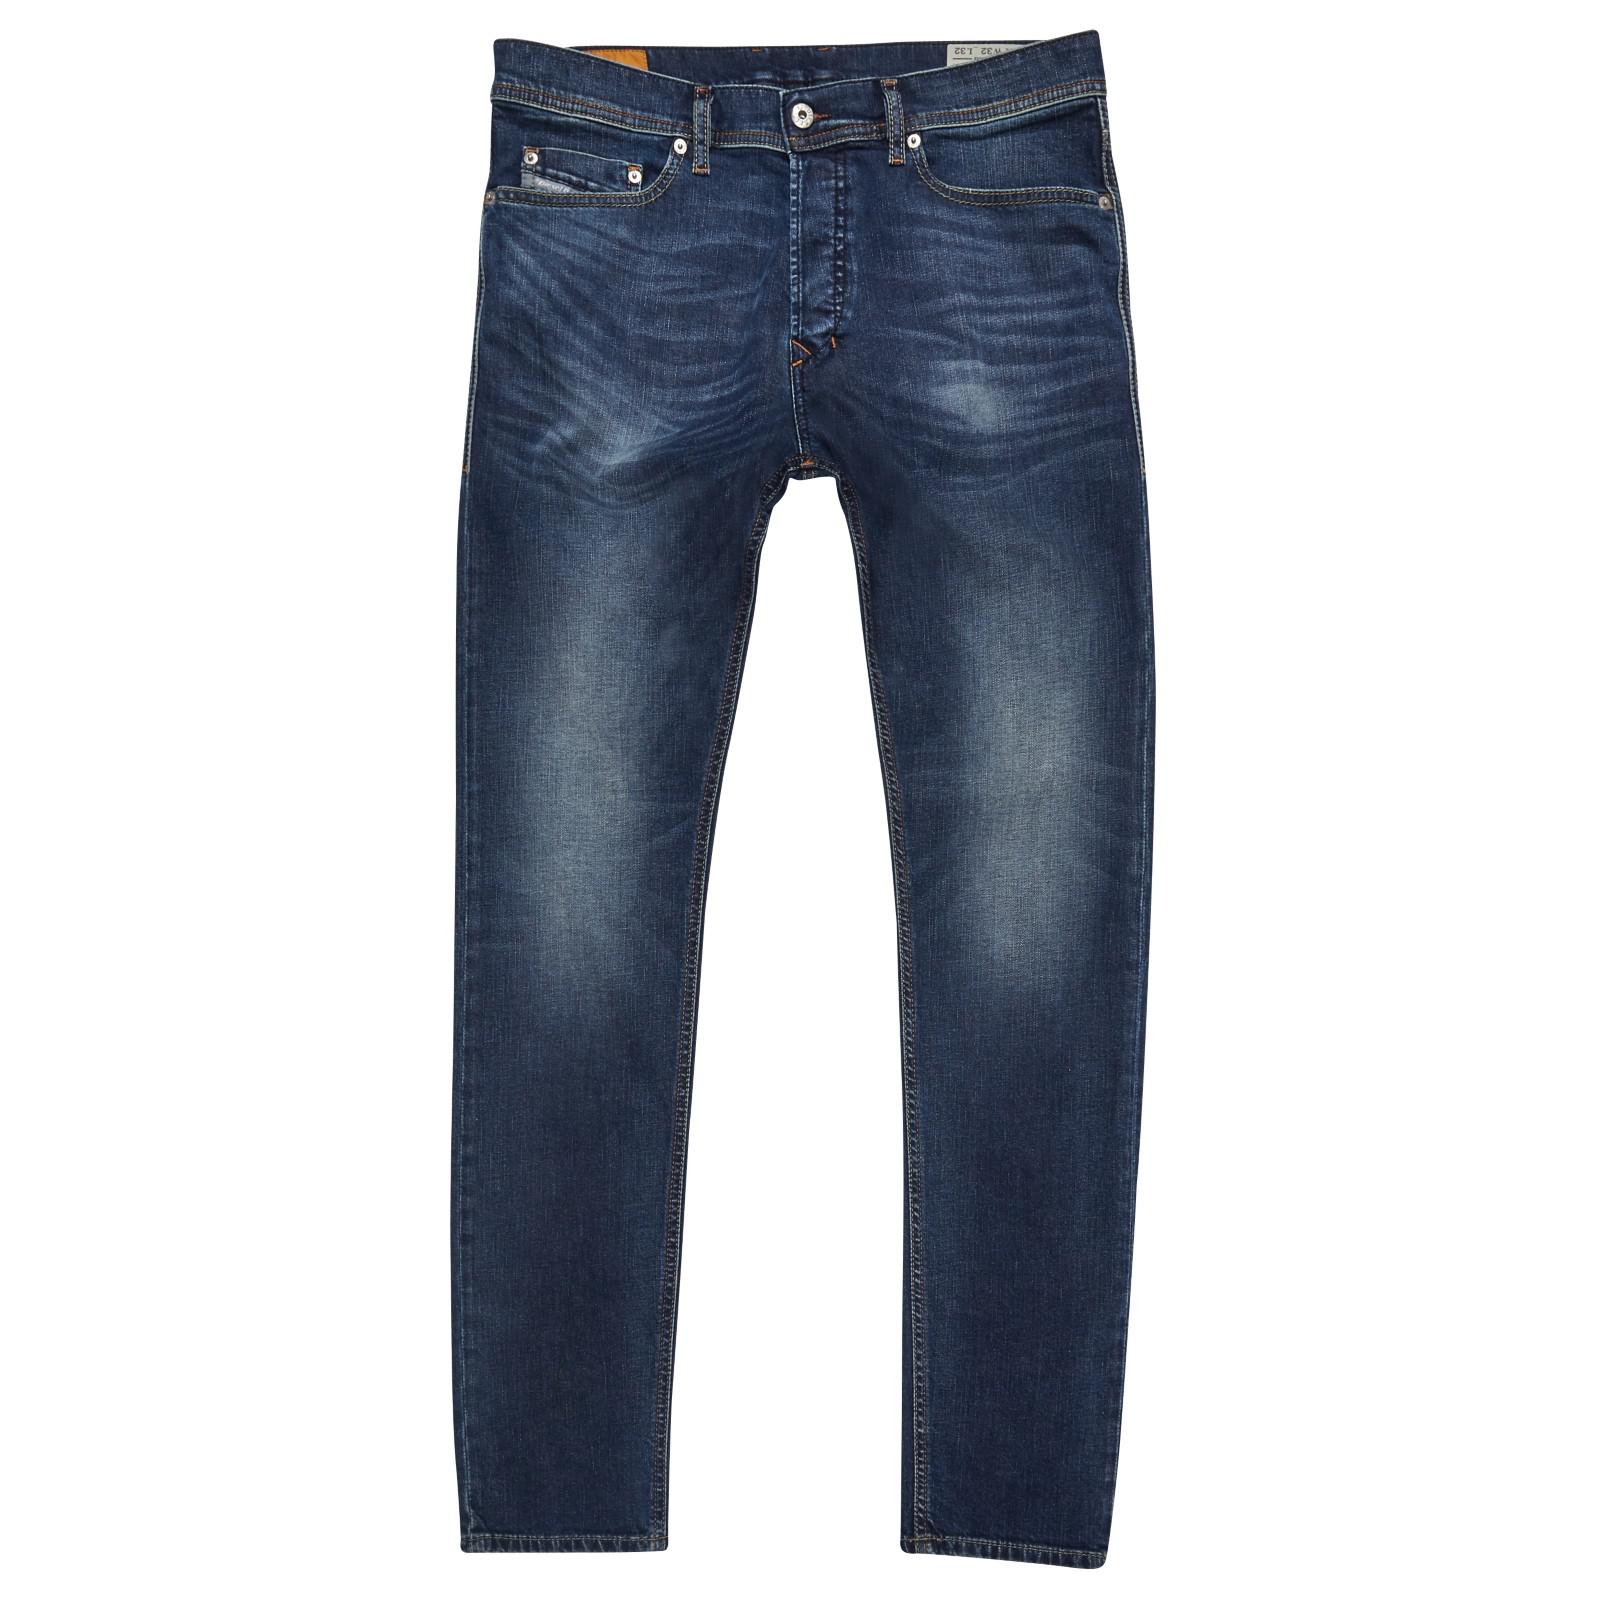 DIESEL Denim Tepphar 0853r Carrot Jeans in Mid Blue Wash (Blue) for Men -  Lyst